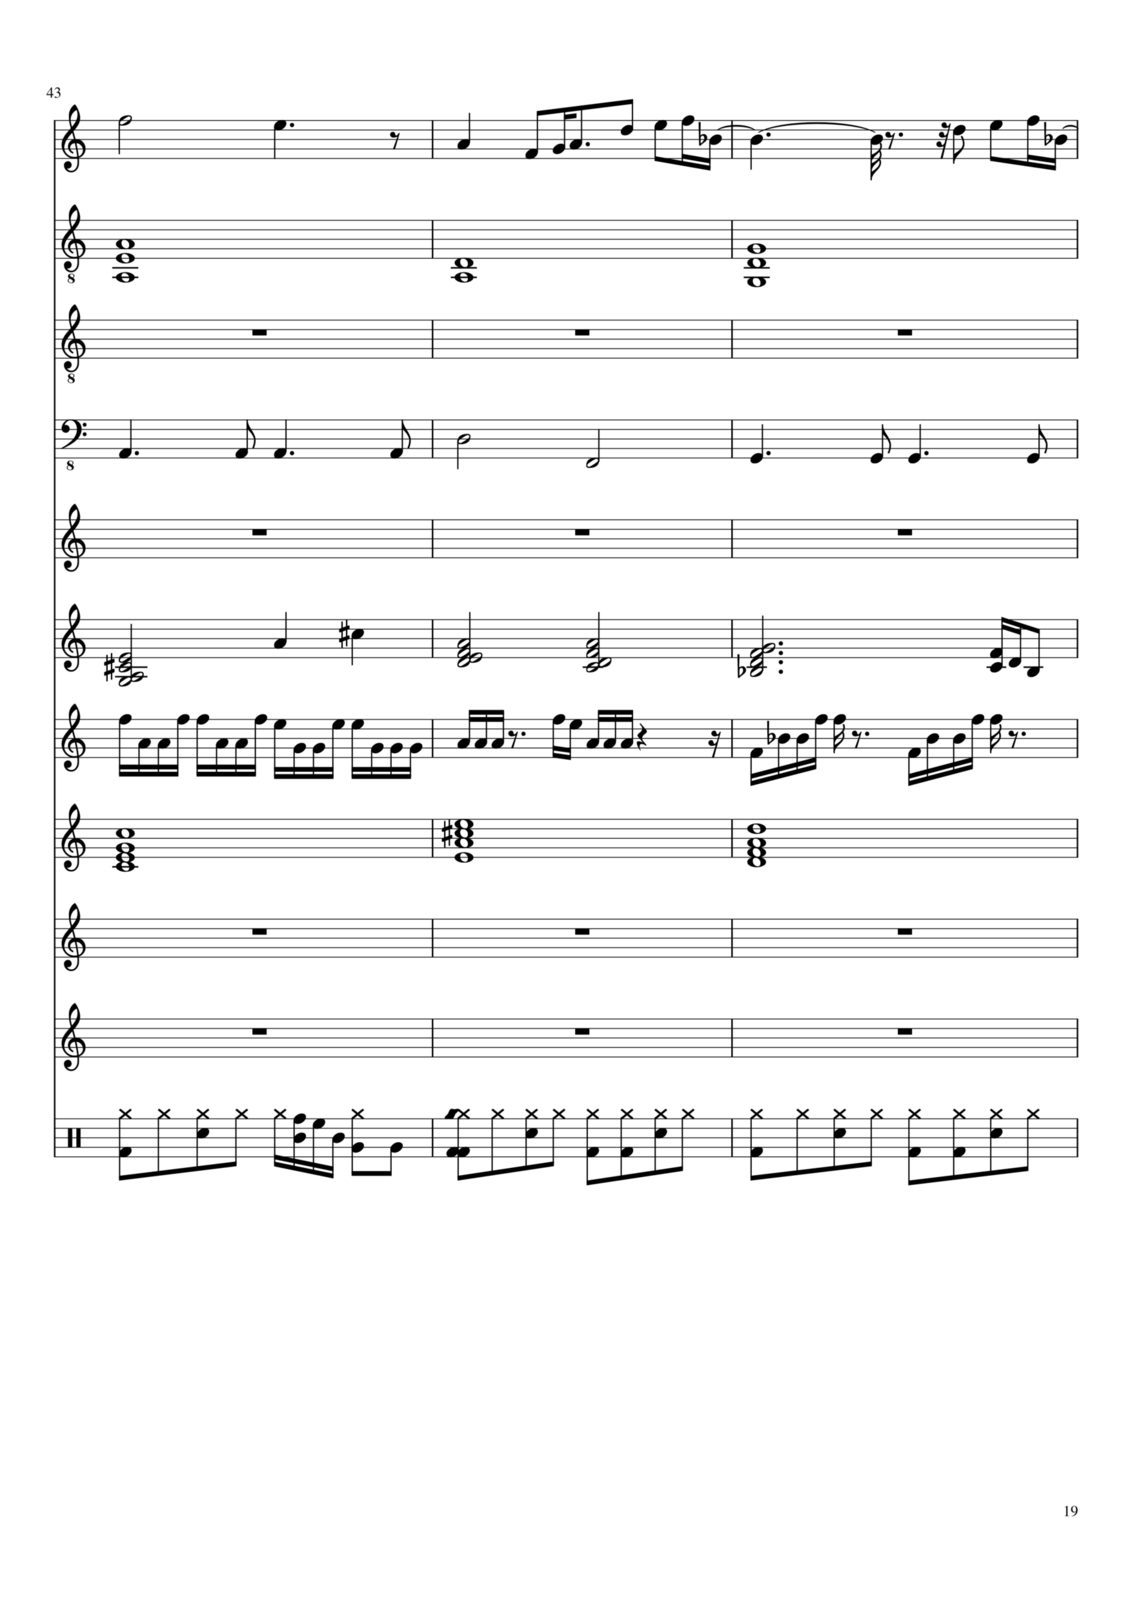 Gorod, kotorogo net slide, Image 19